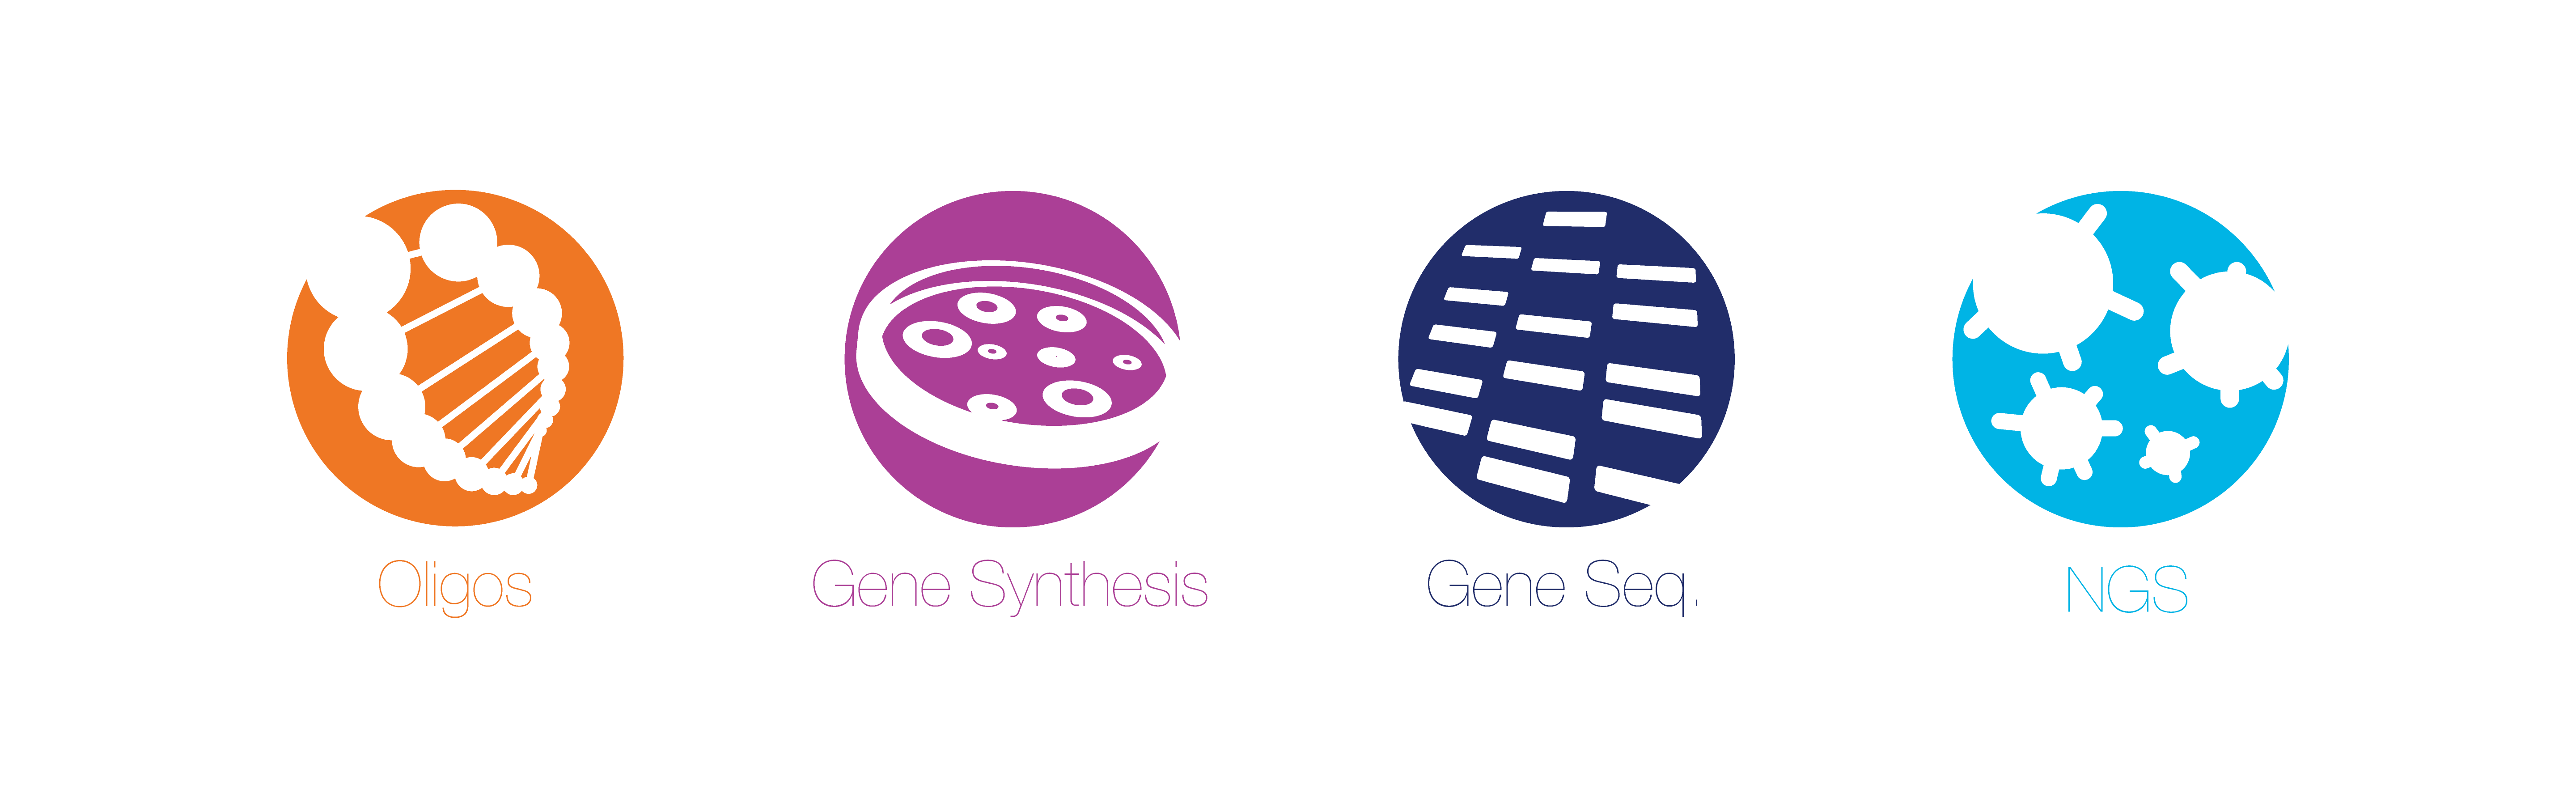 Eurofins Genomics Icons